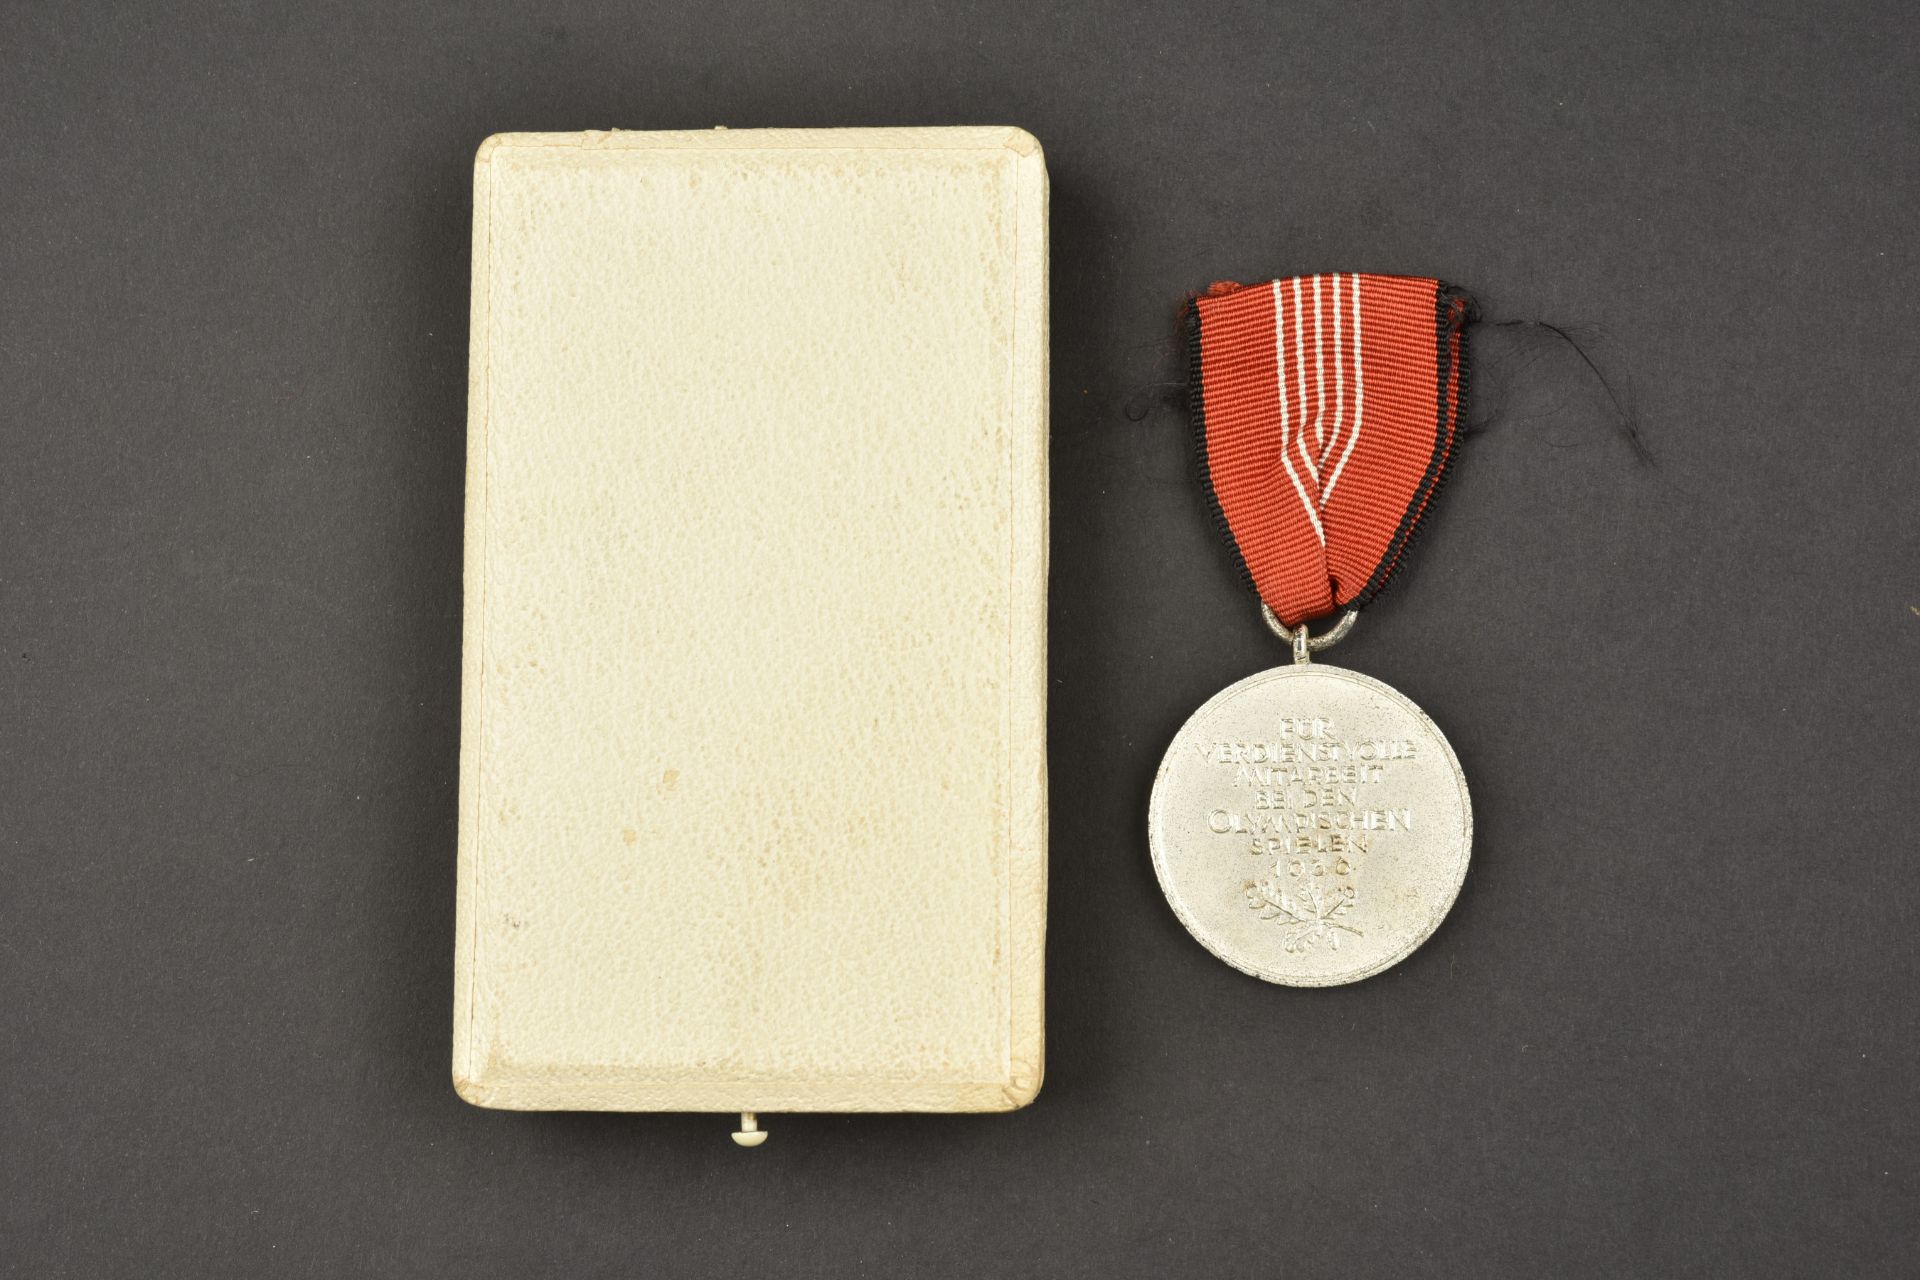 Medaille de service Jeux olympique. Service medal Olympic Games. - Bild 2 aus 5